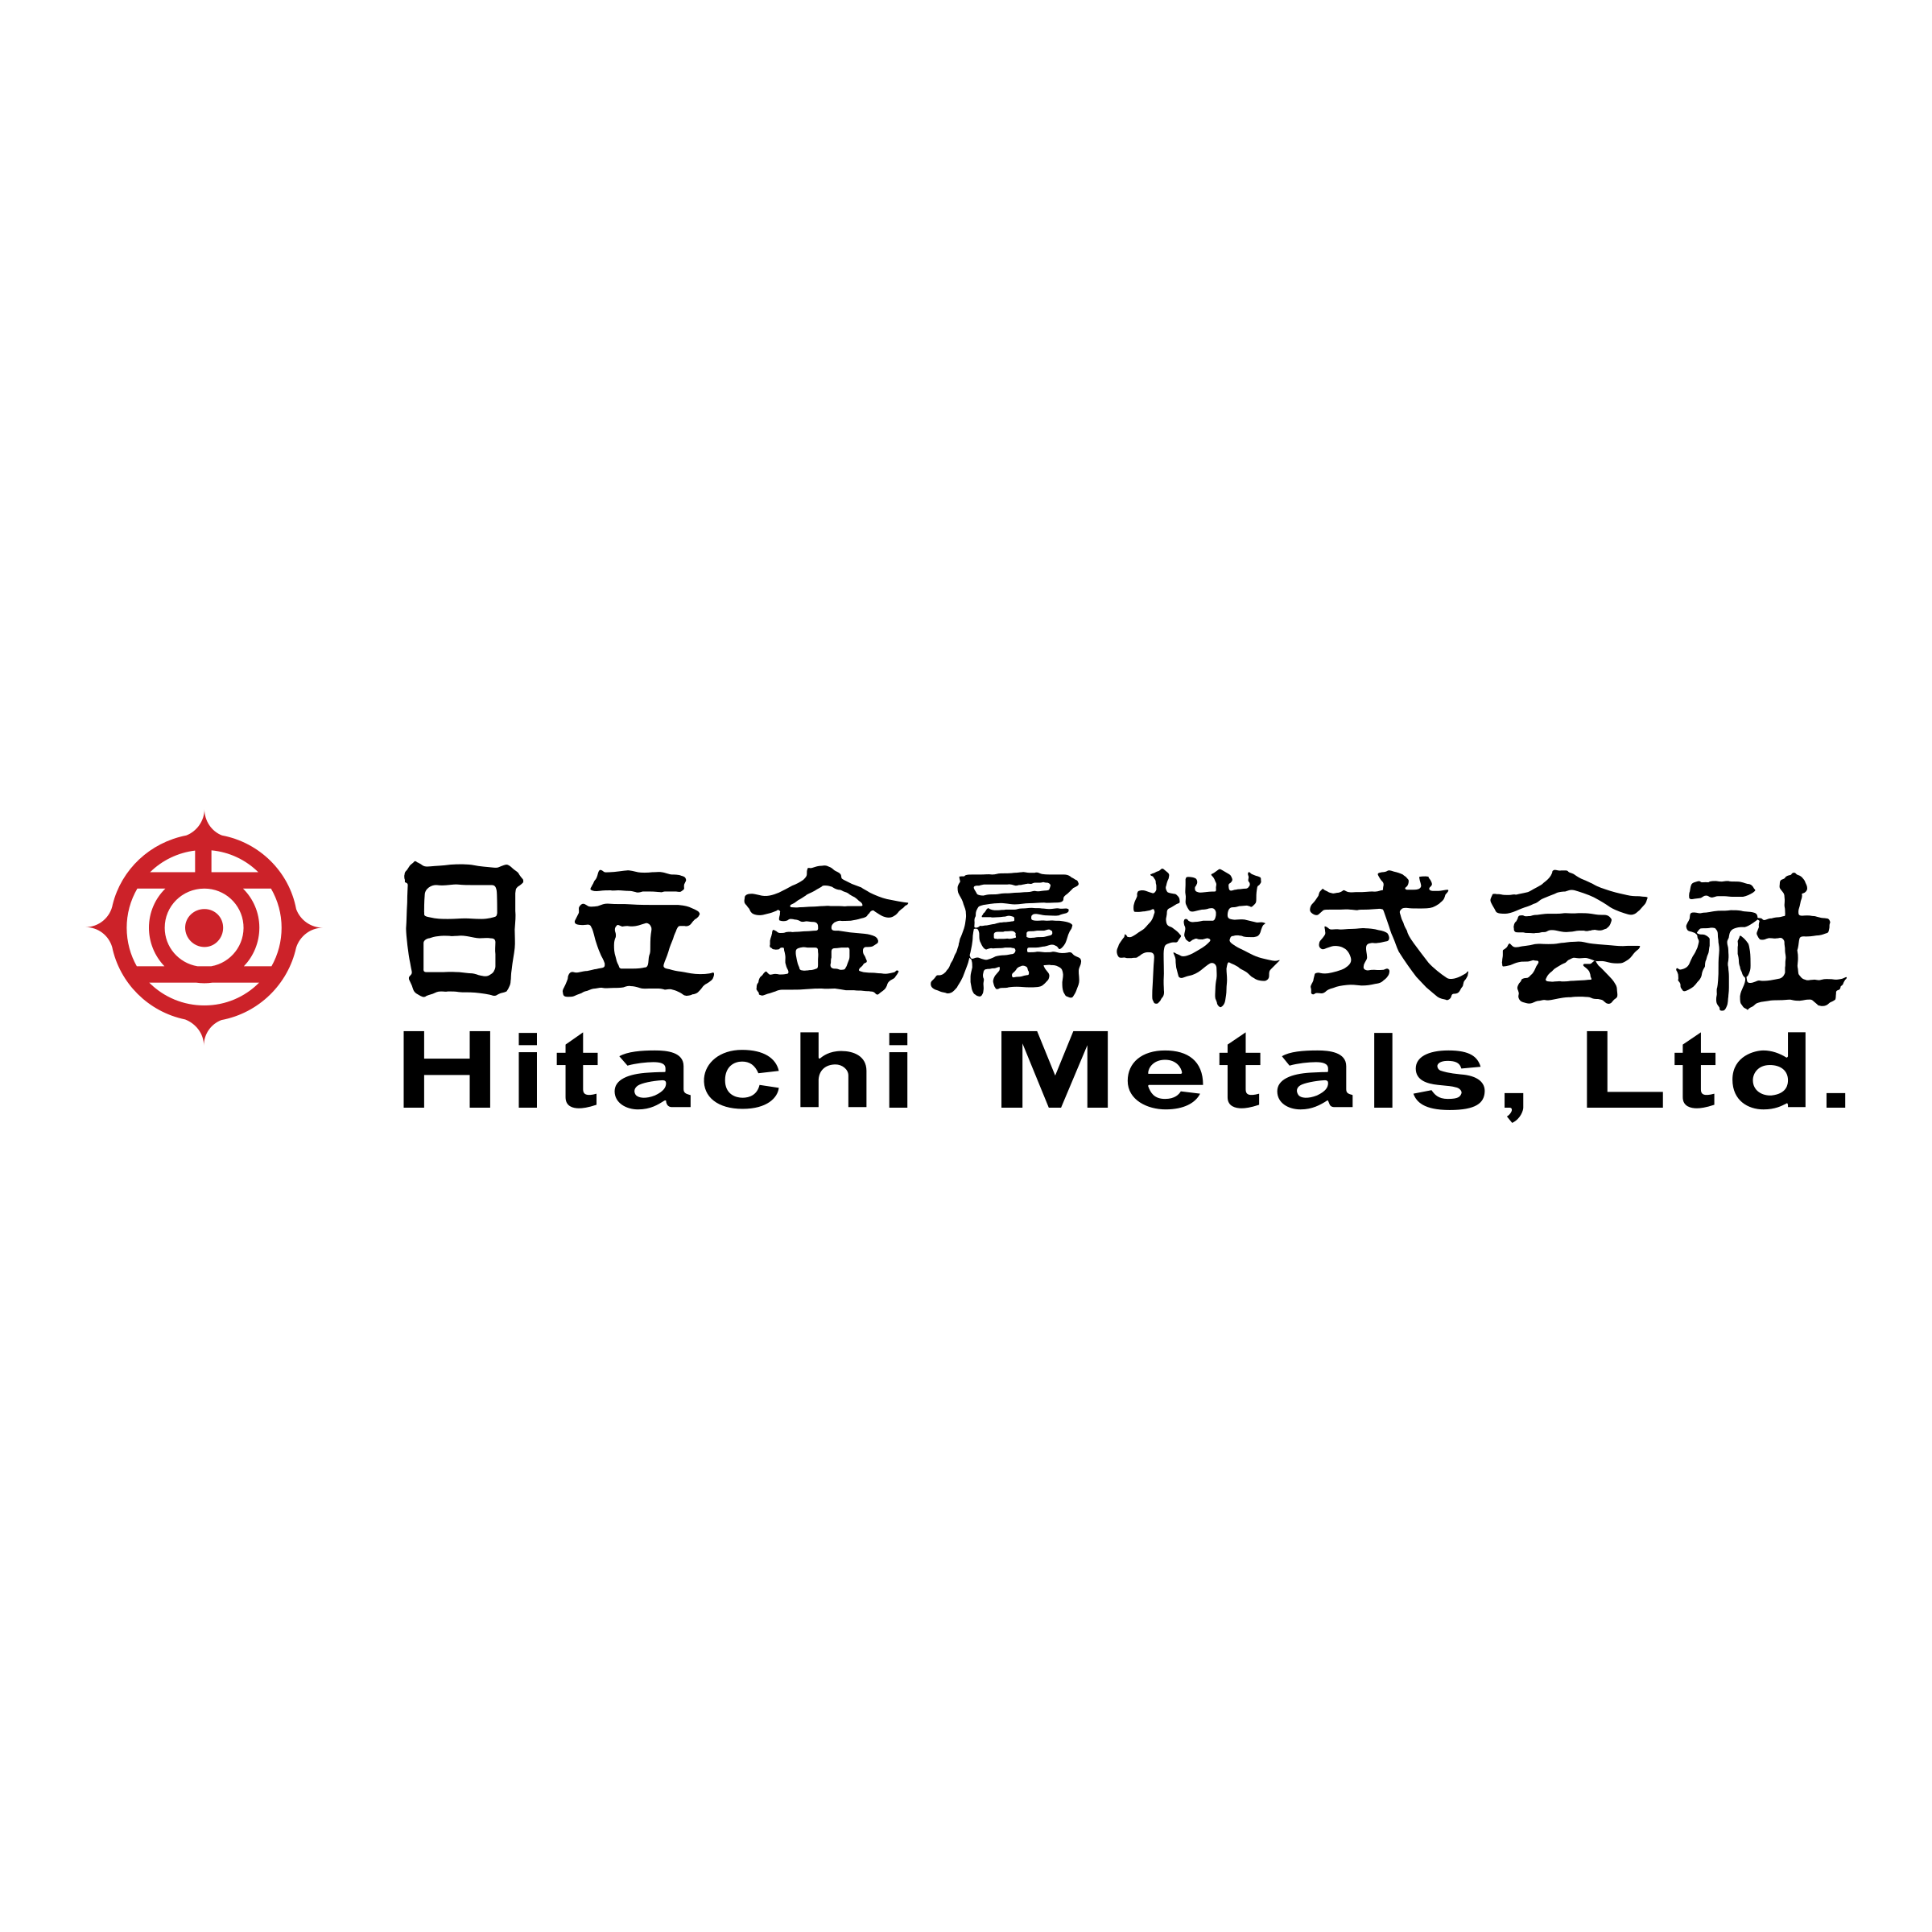 Hitachi White Logo - Hitachi Metals Logo PNG Transparent & SVG Vector